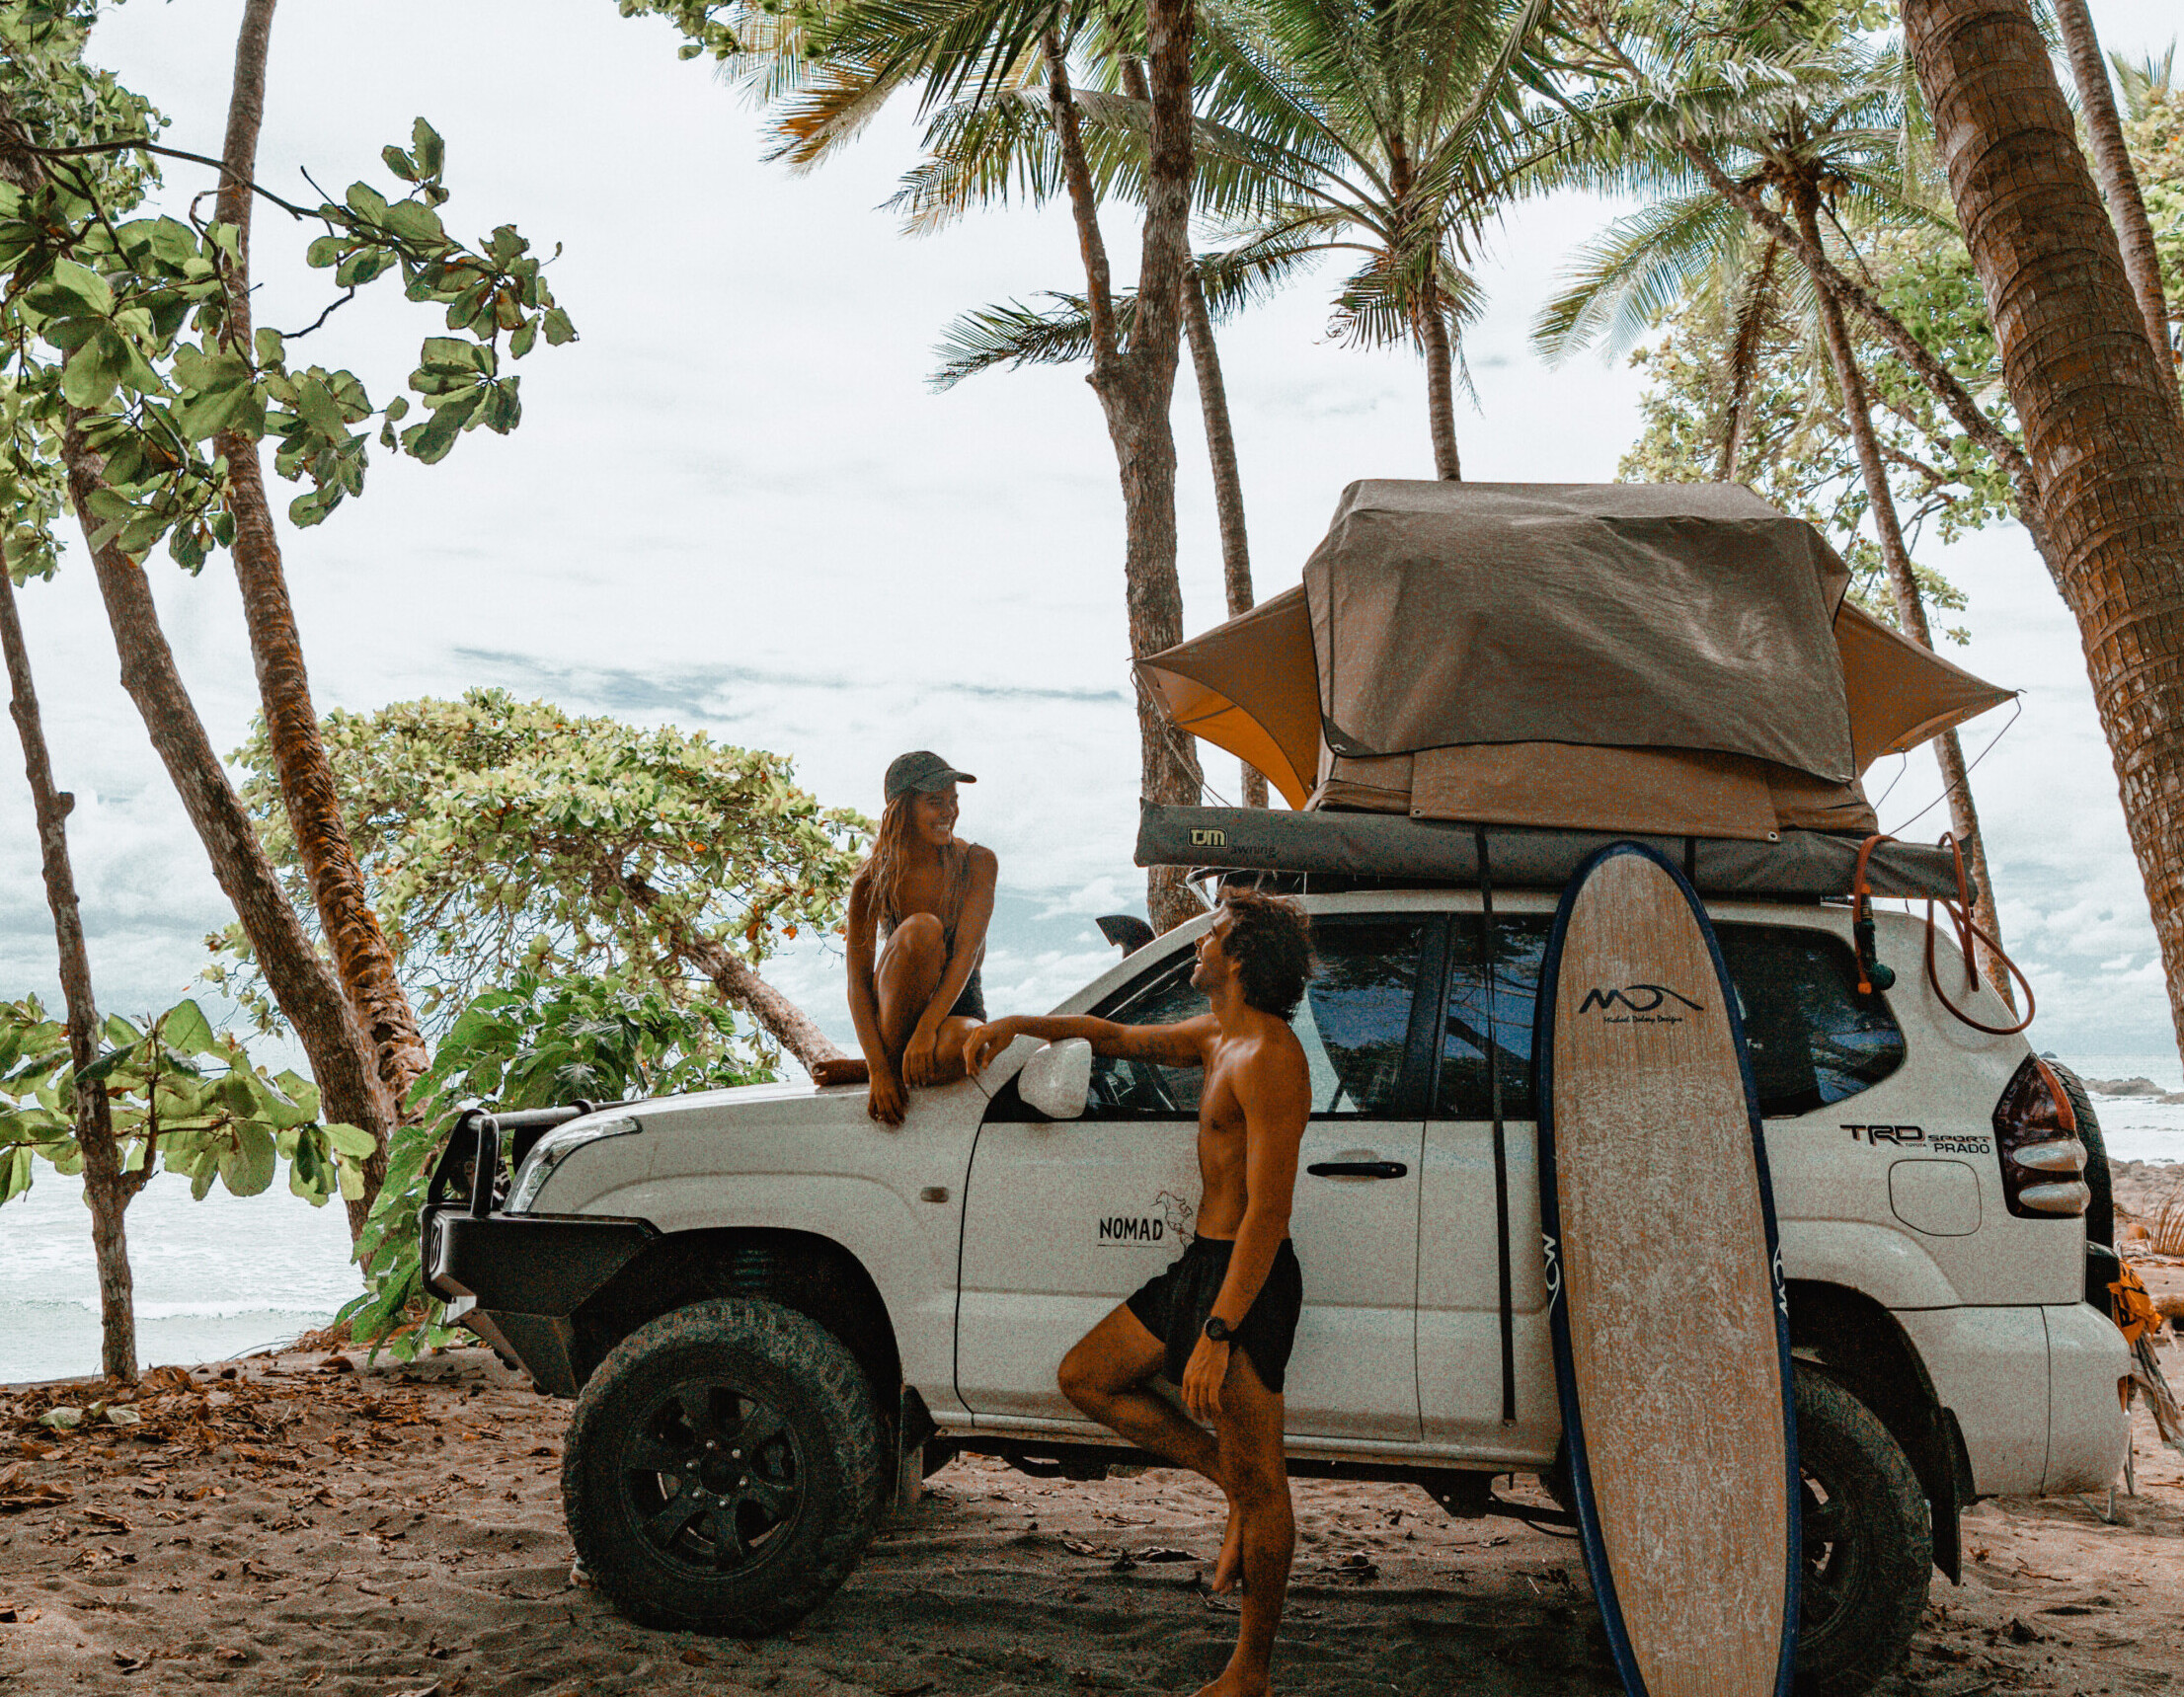 Where to Camp in Costa Rica?